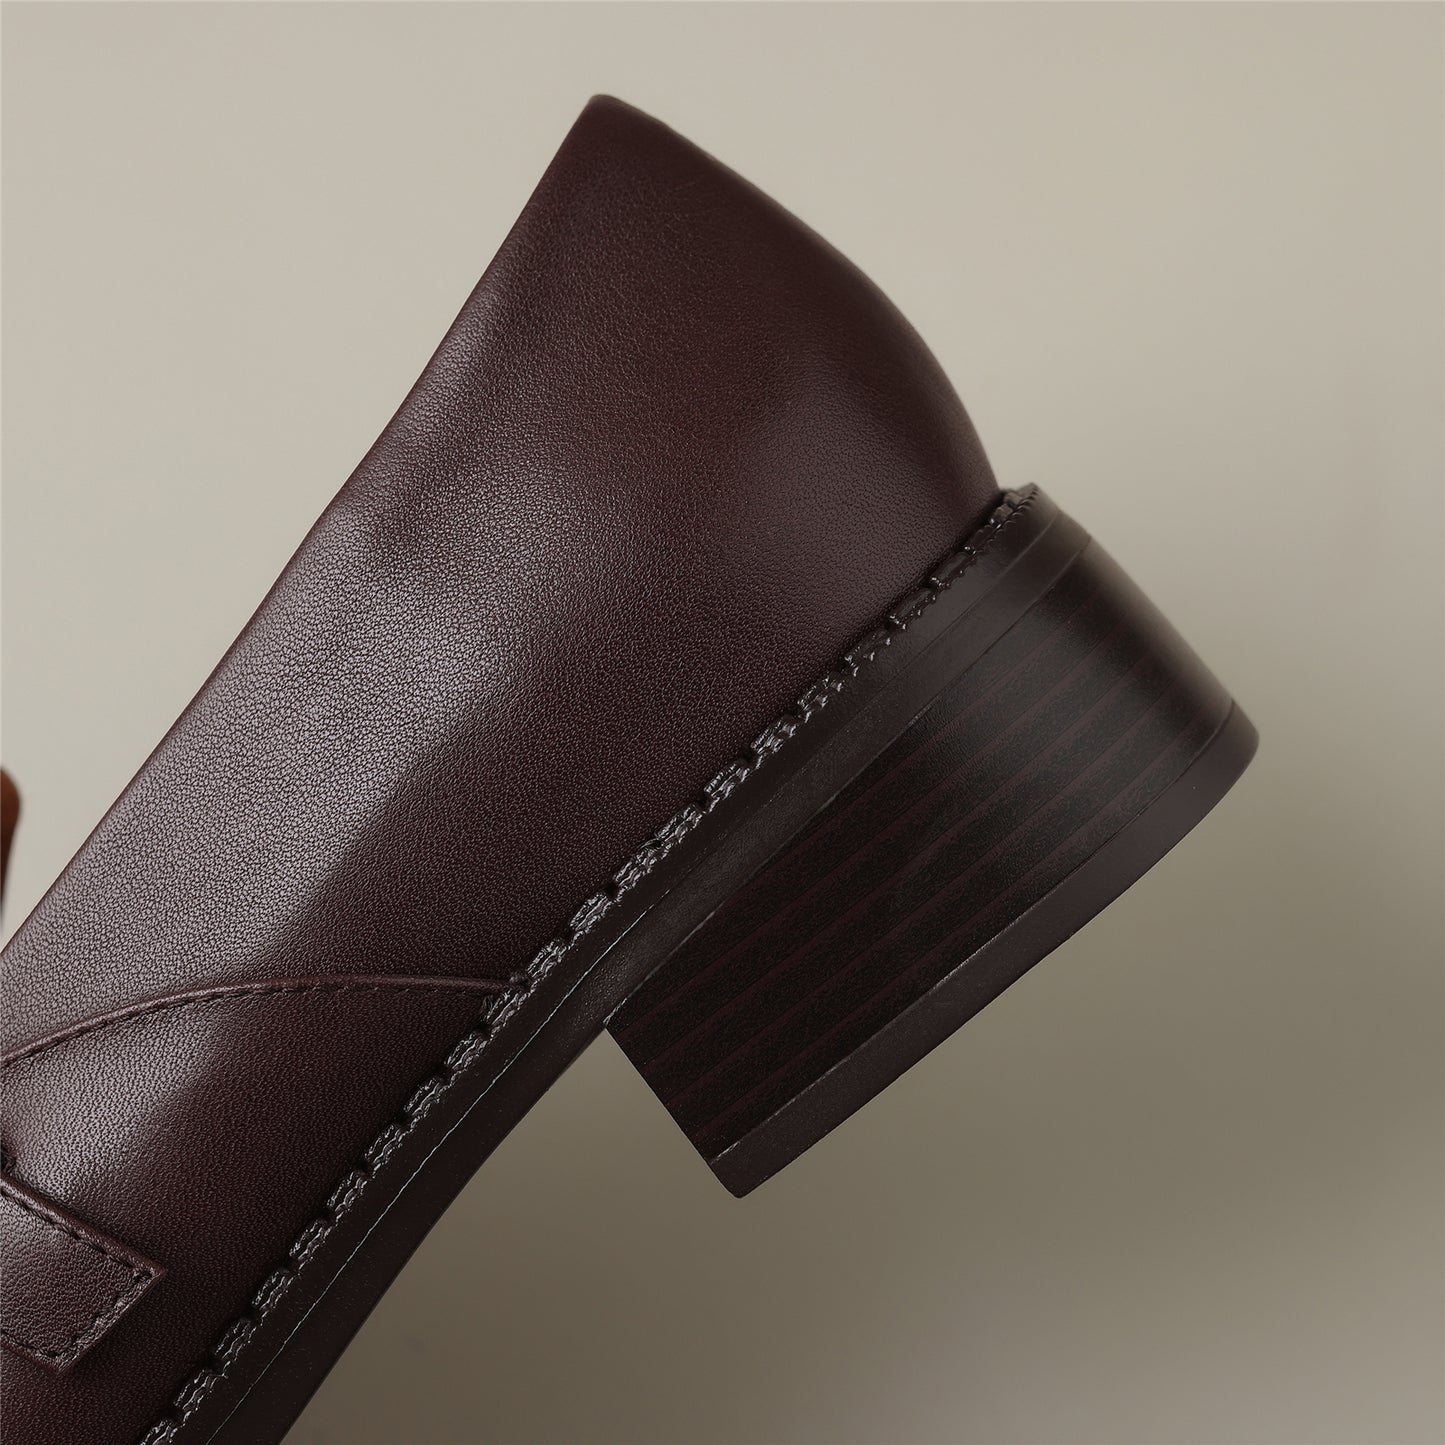 TinaCus Women's Genuine Leather Round Toe Handmade Slip On Low Block Heel Pumps Shoes